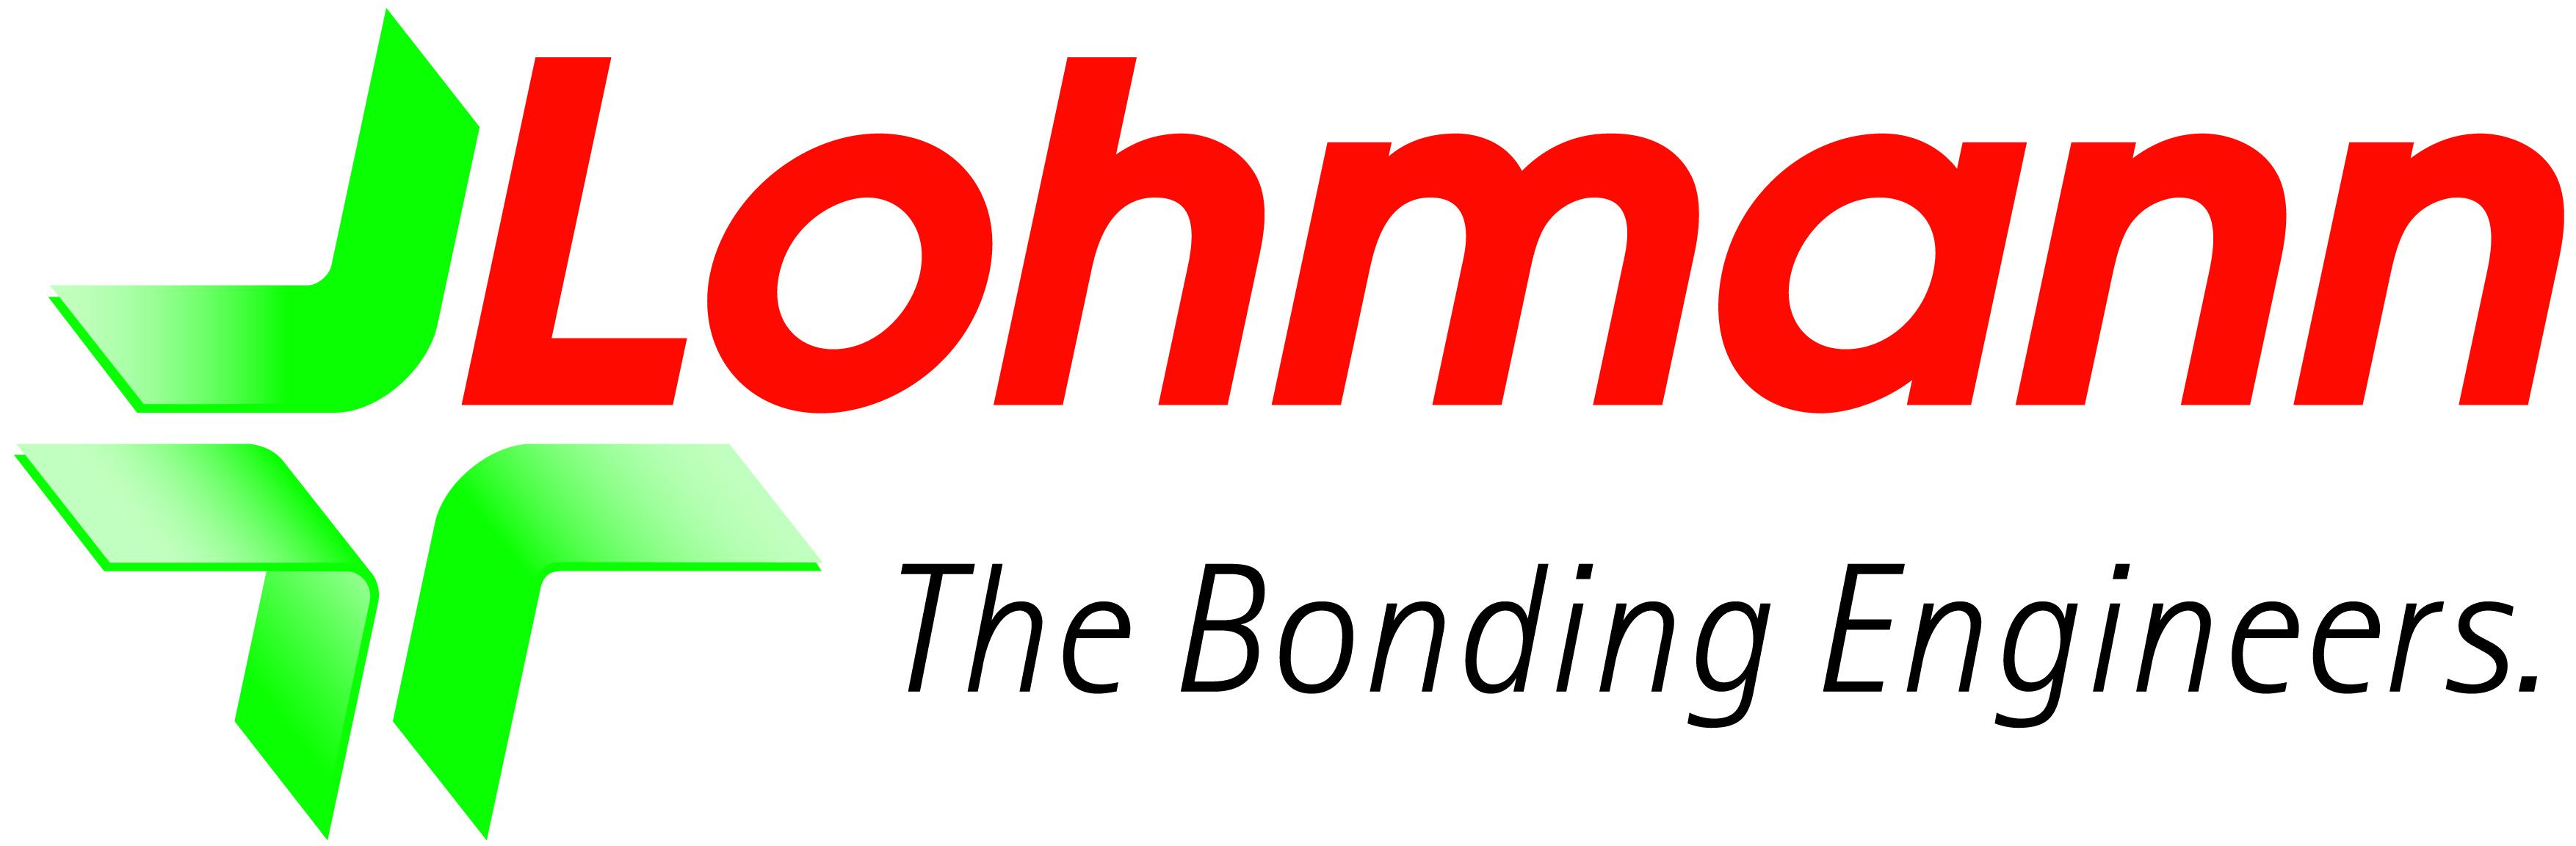 Lohmann: The Bonding Engineers